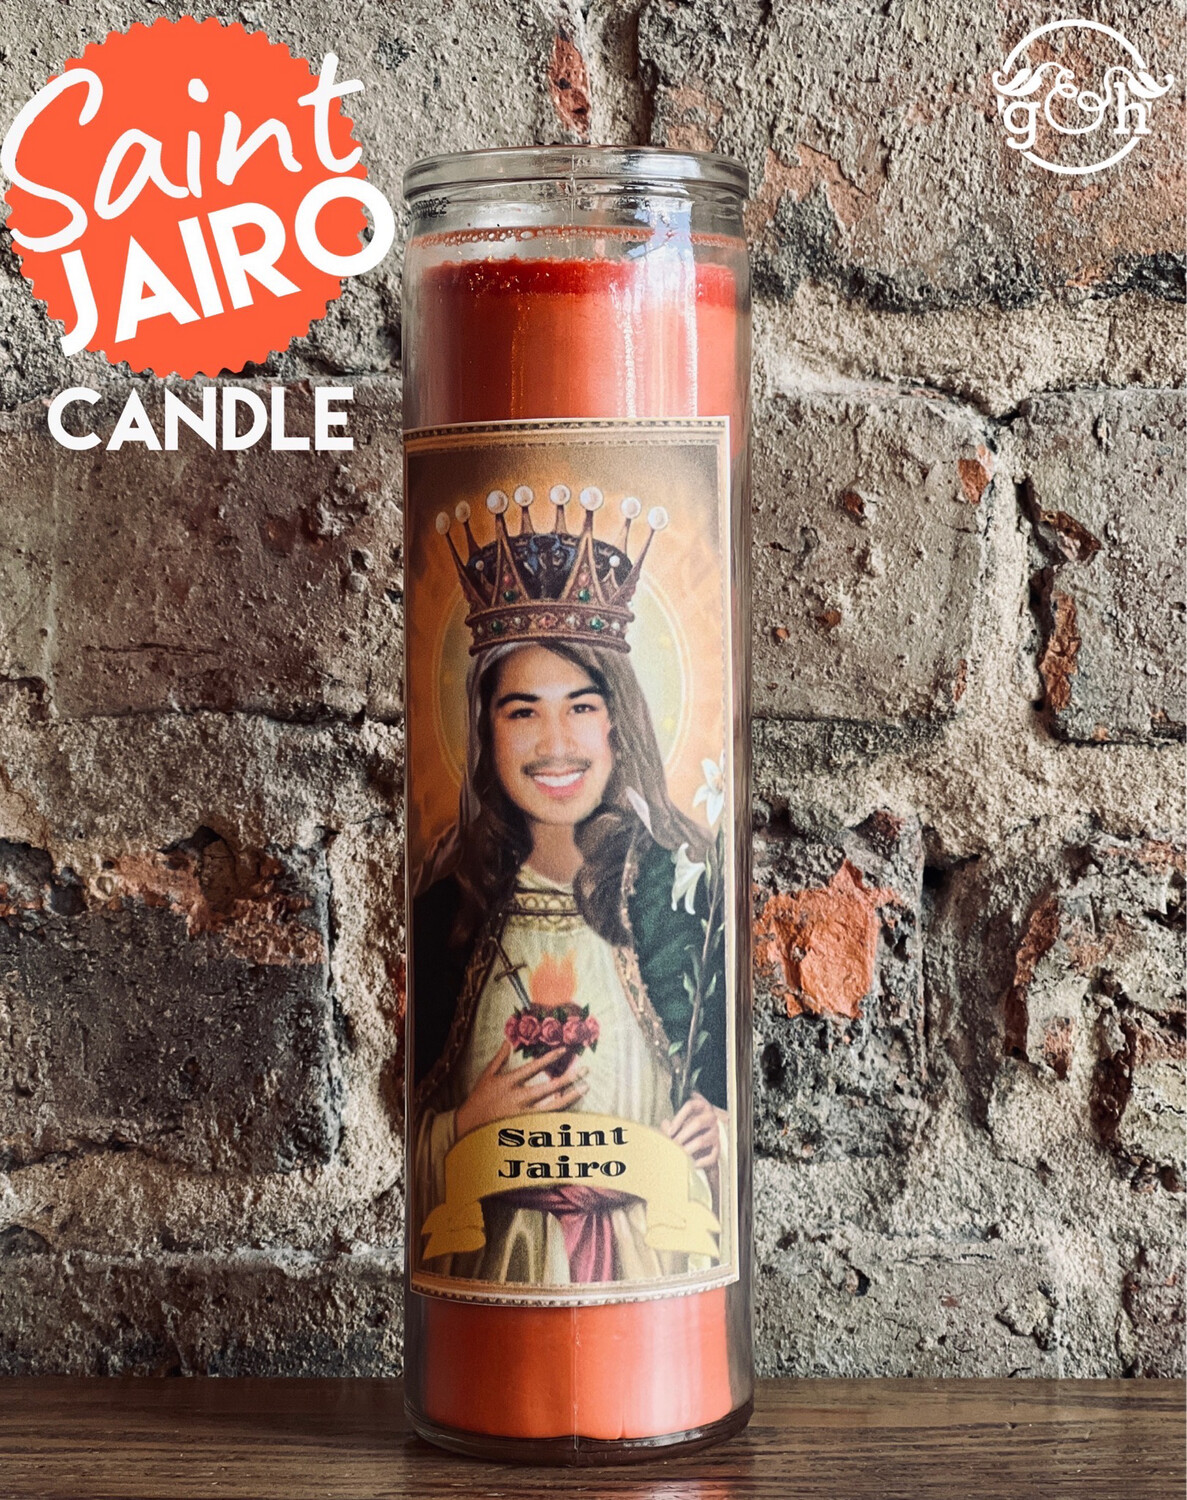 St Jairo Candle